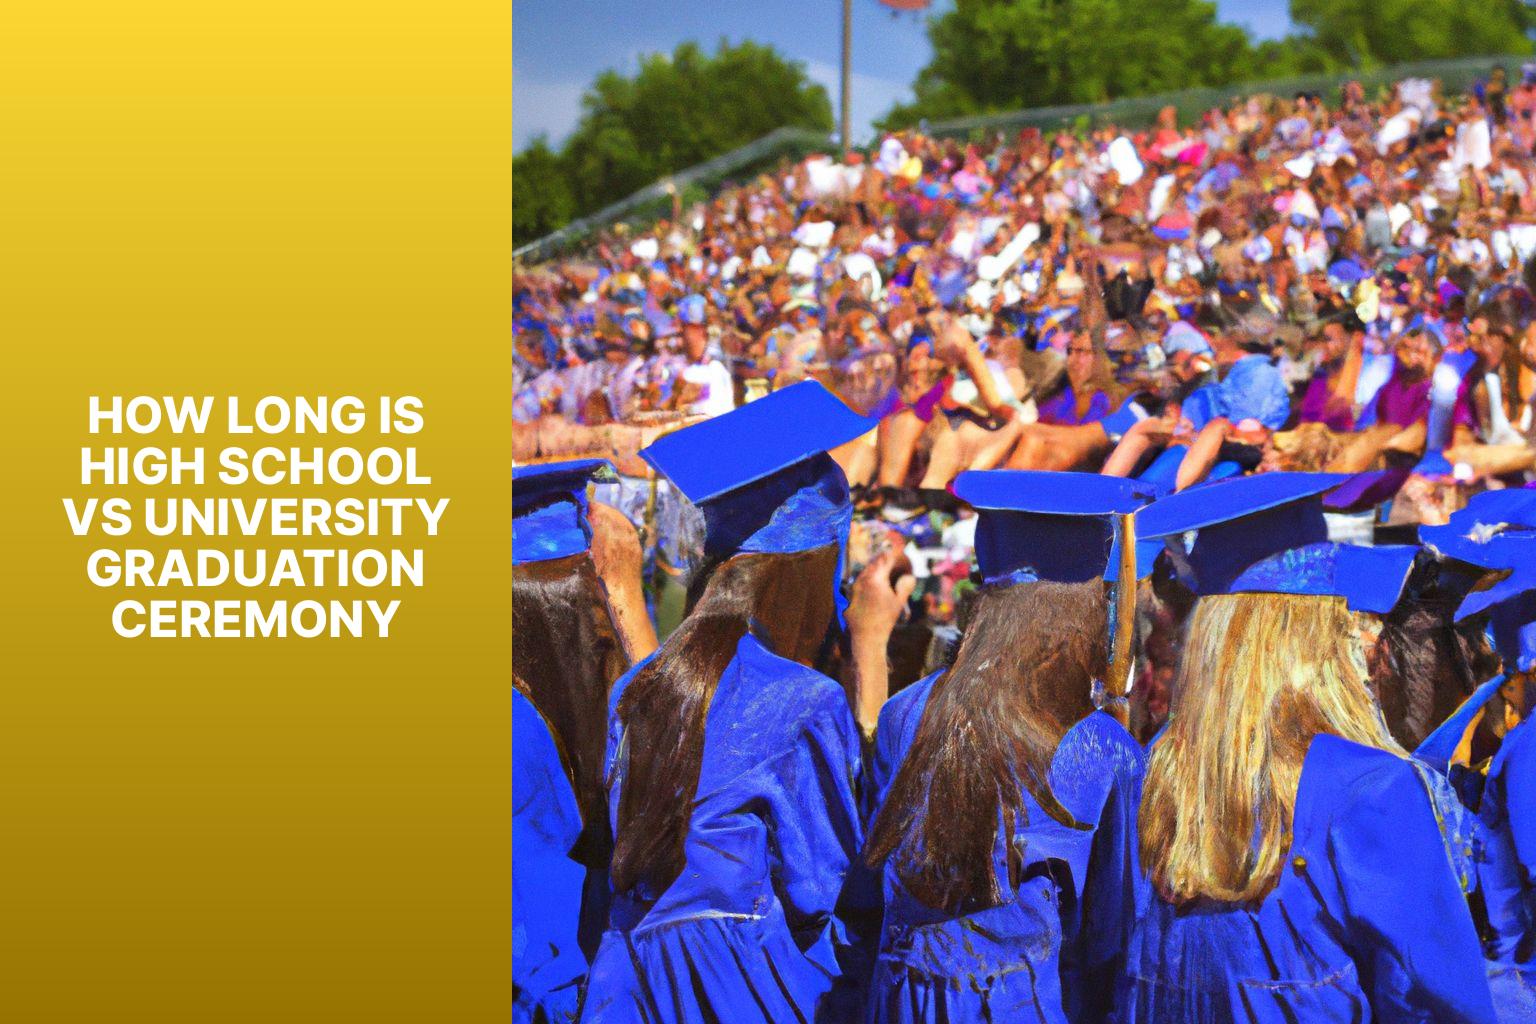 How long is high school vs university graduation ceremony